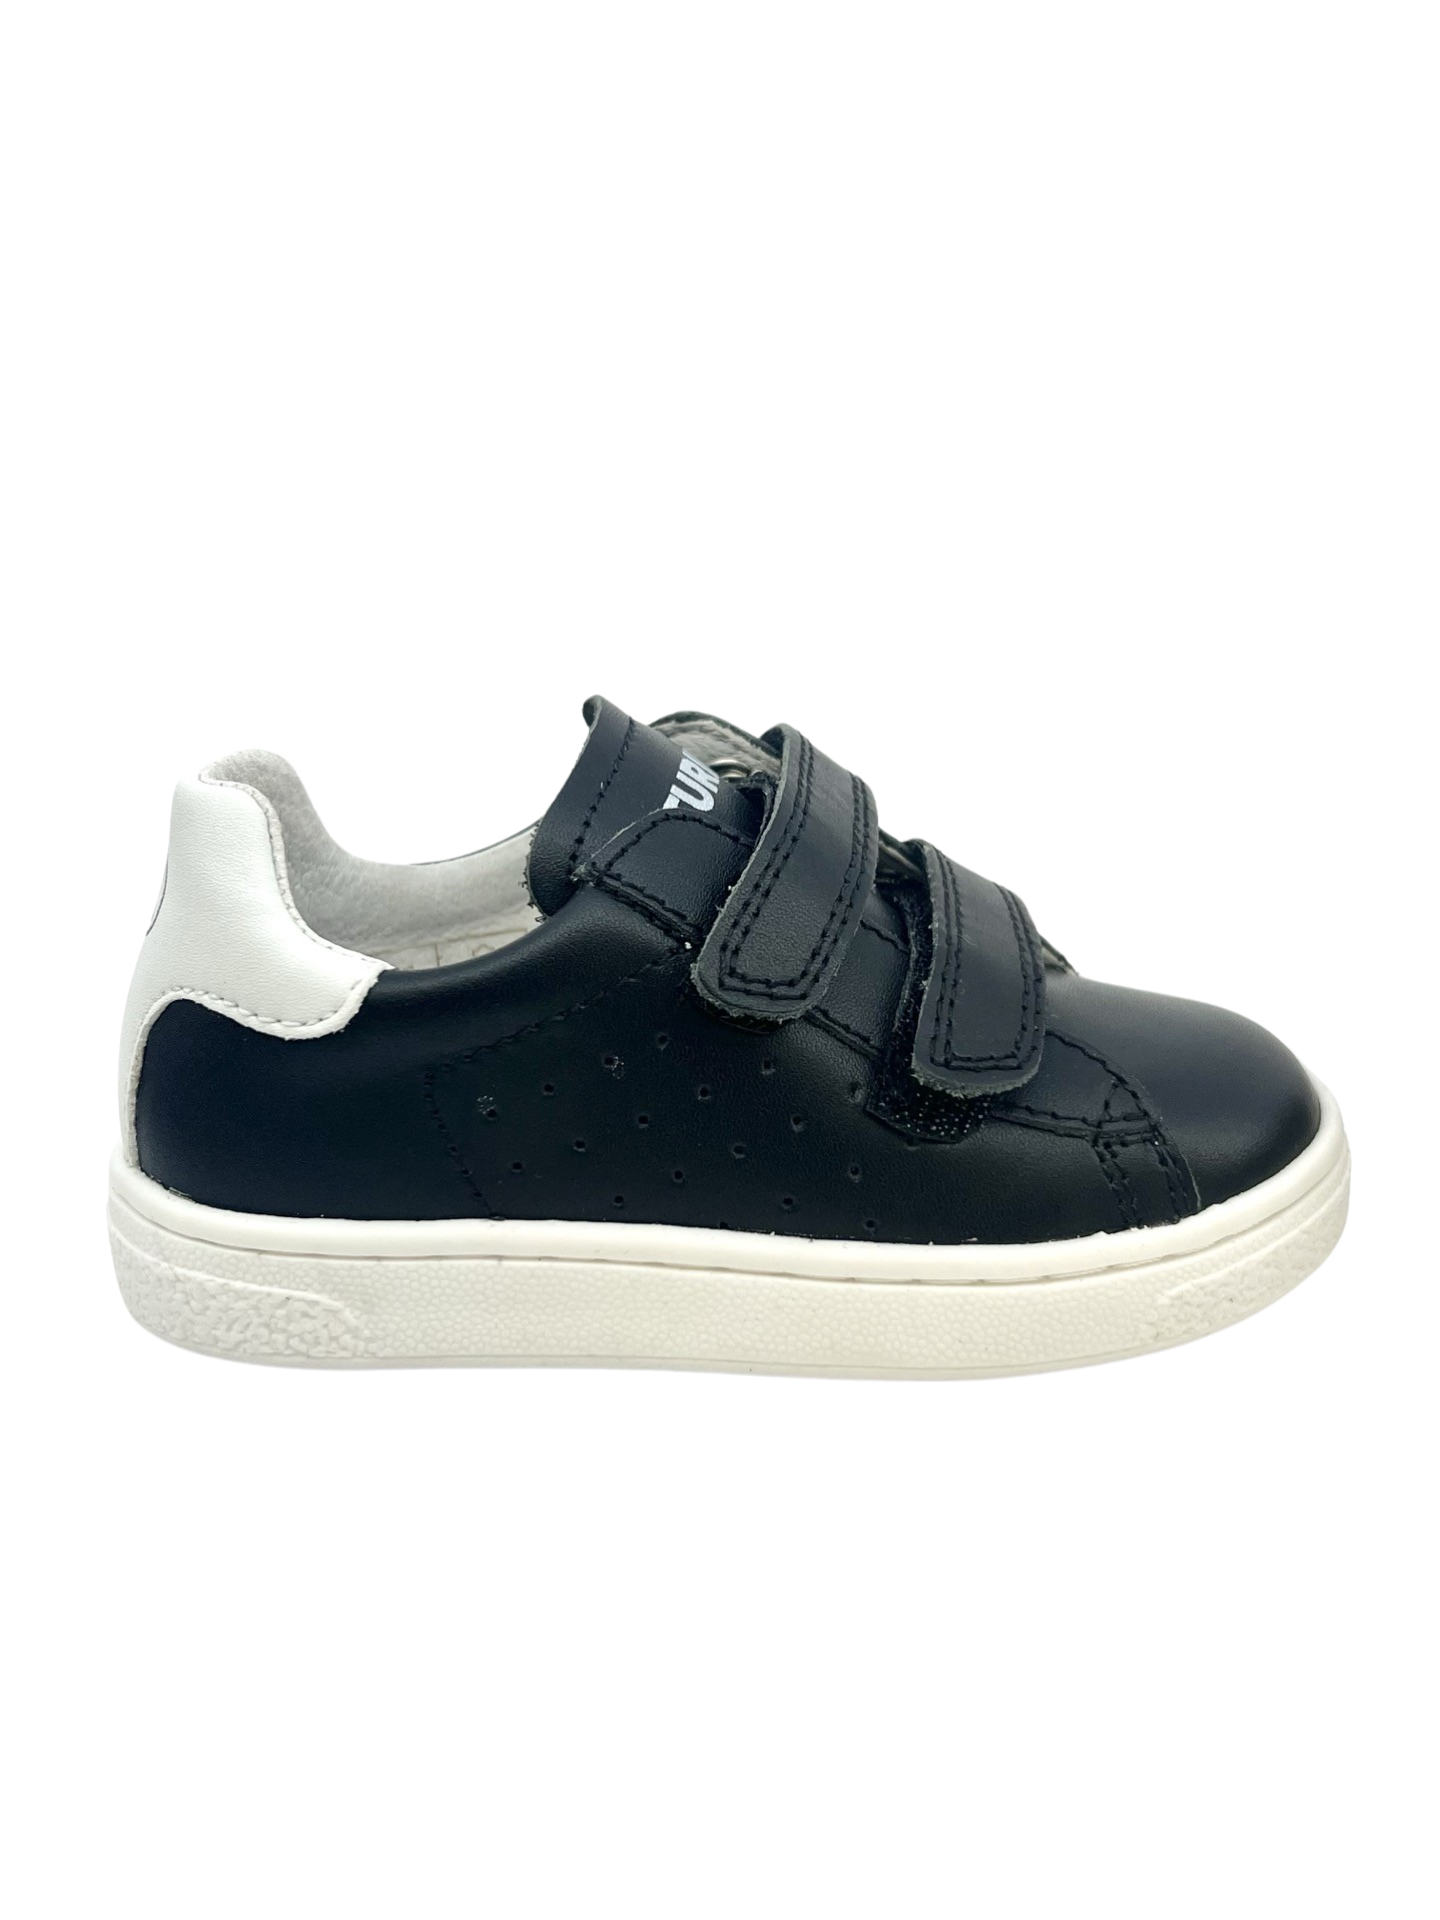 Naturino Black Double Velcro Sneaker - Hasselt